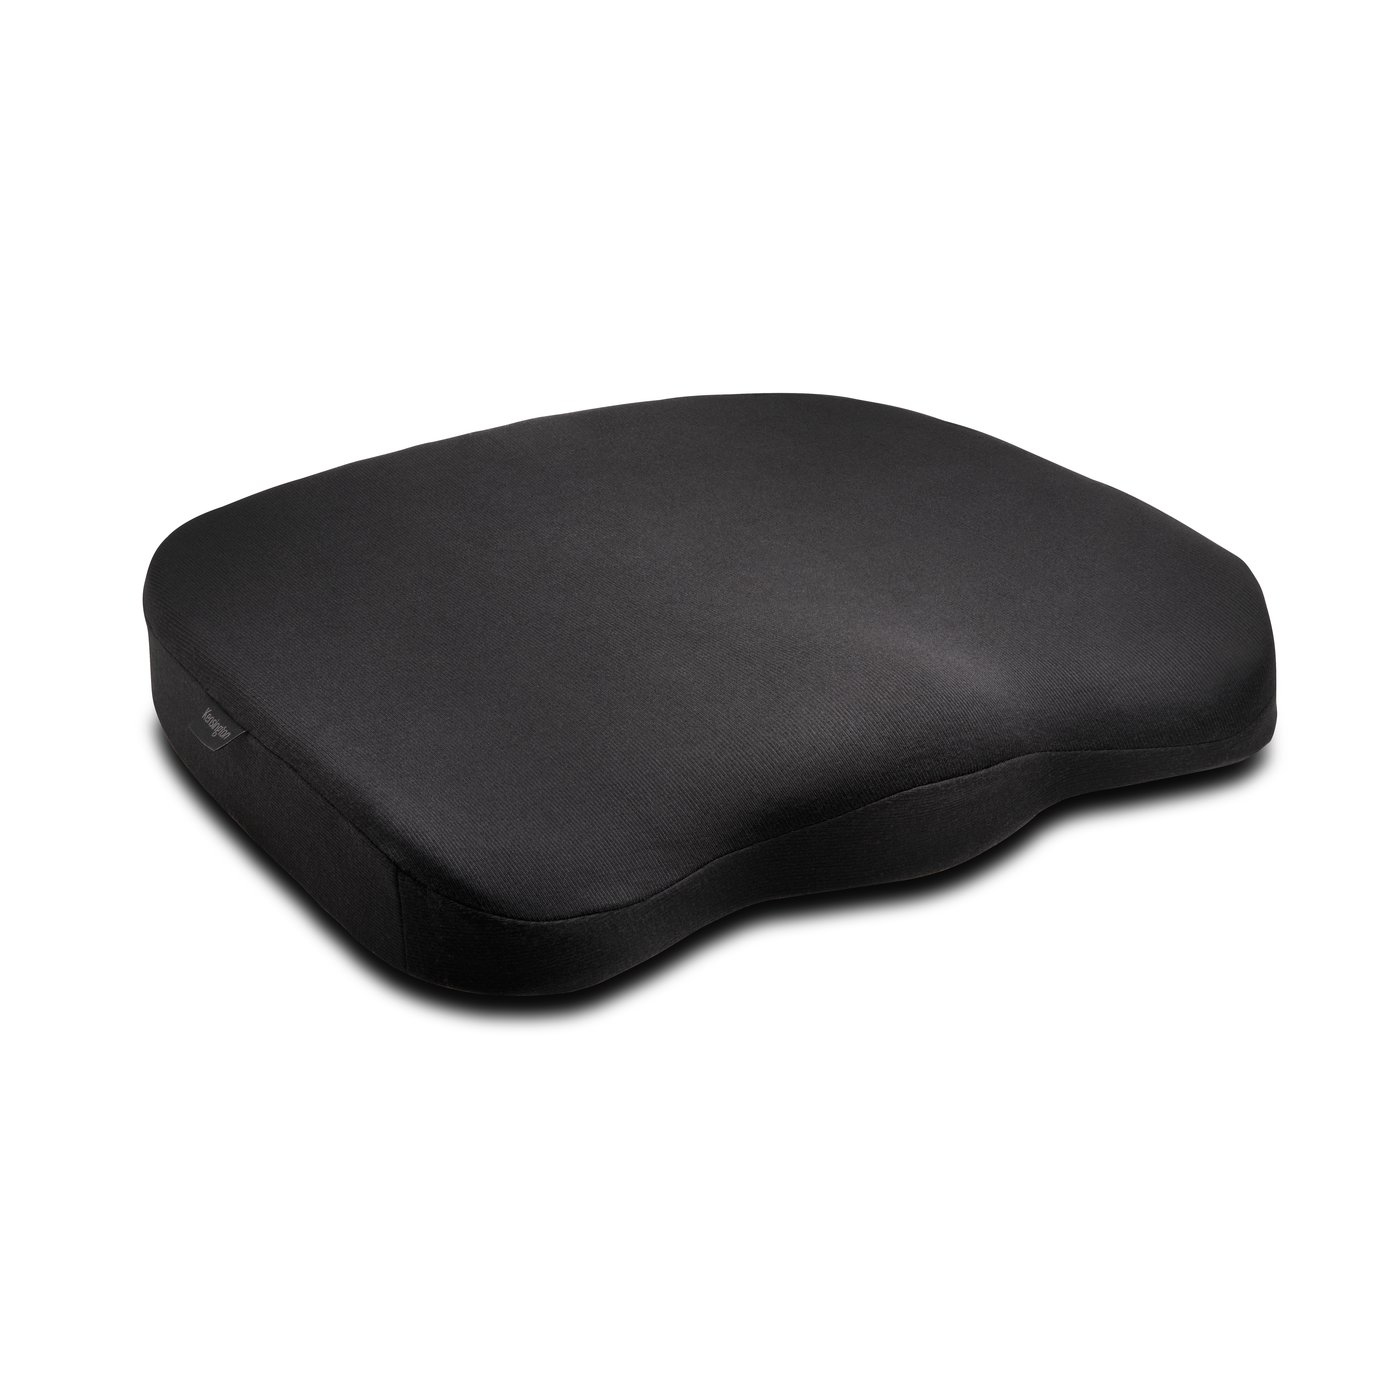 Ergo Memory Foam Seat Cushion K55805ww - WC01